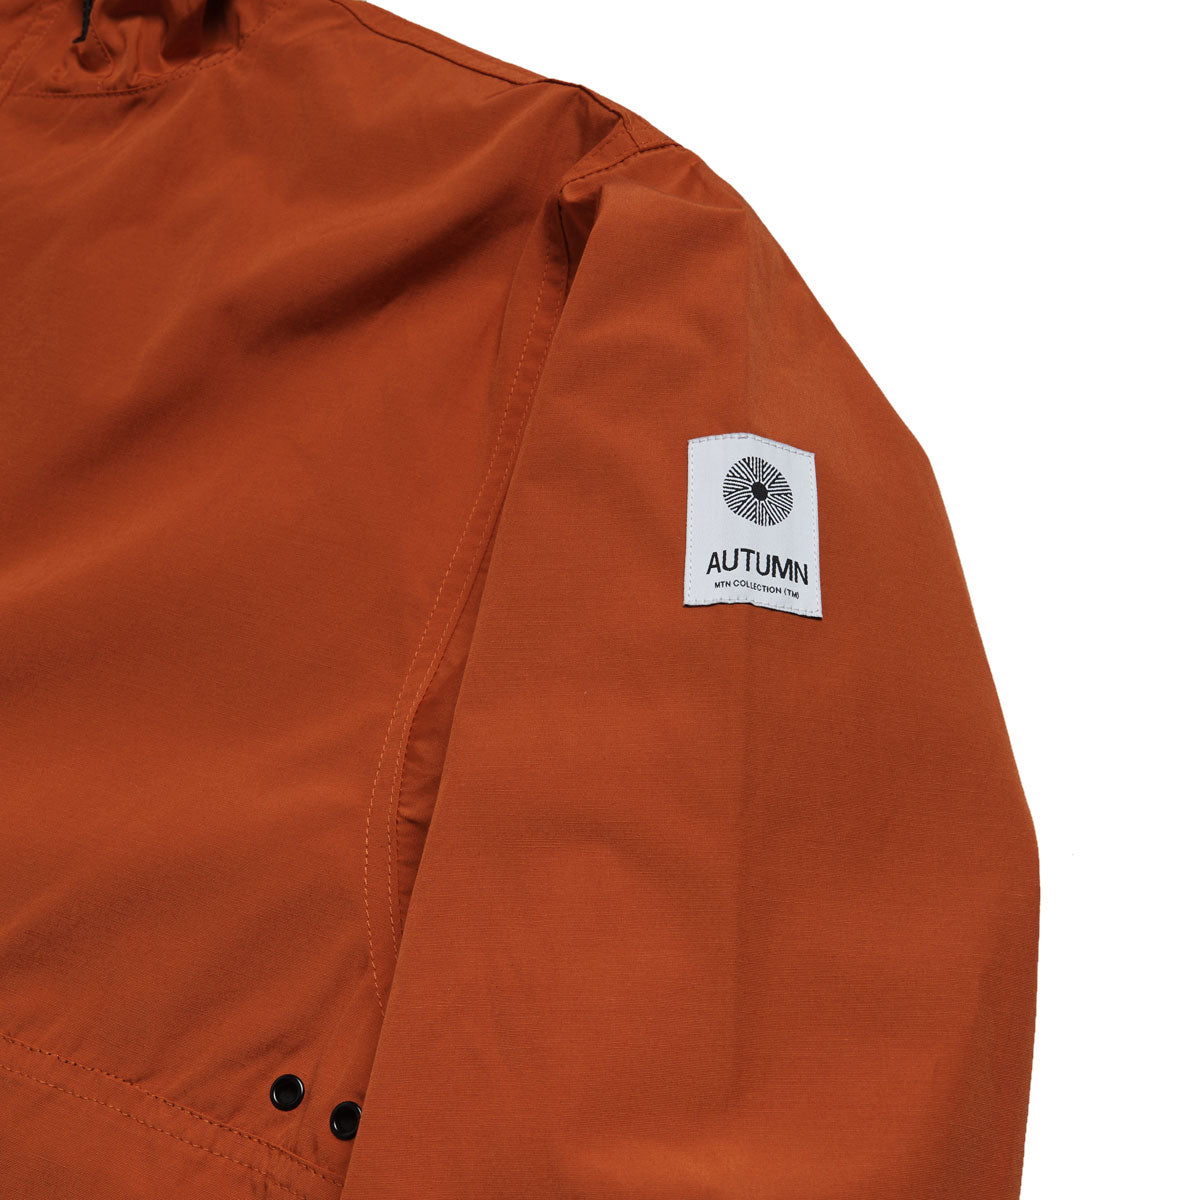 Autumn Cascade Anorak Jacket - Blaze Orange image 5